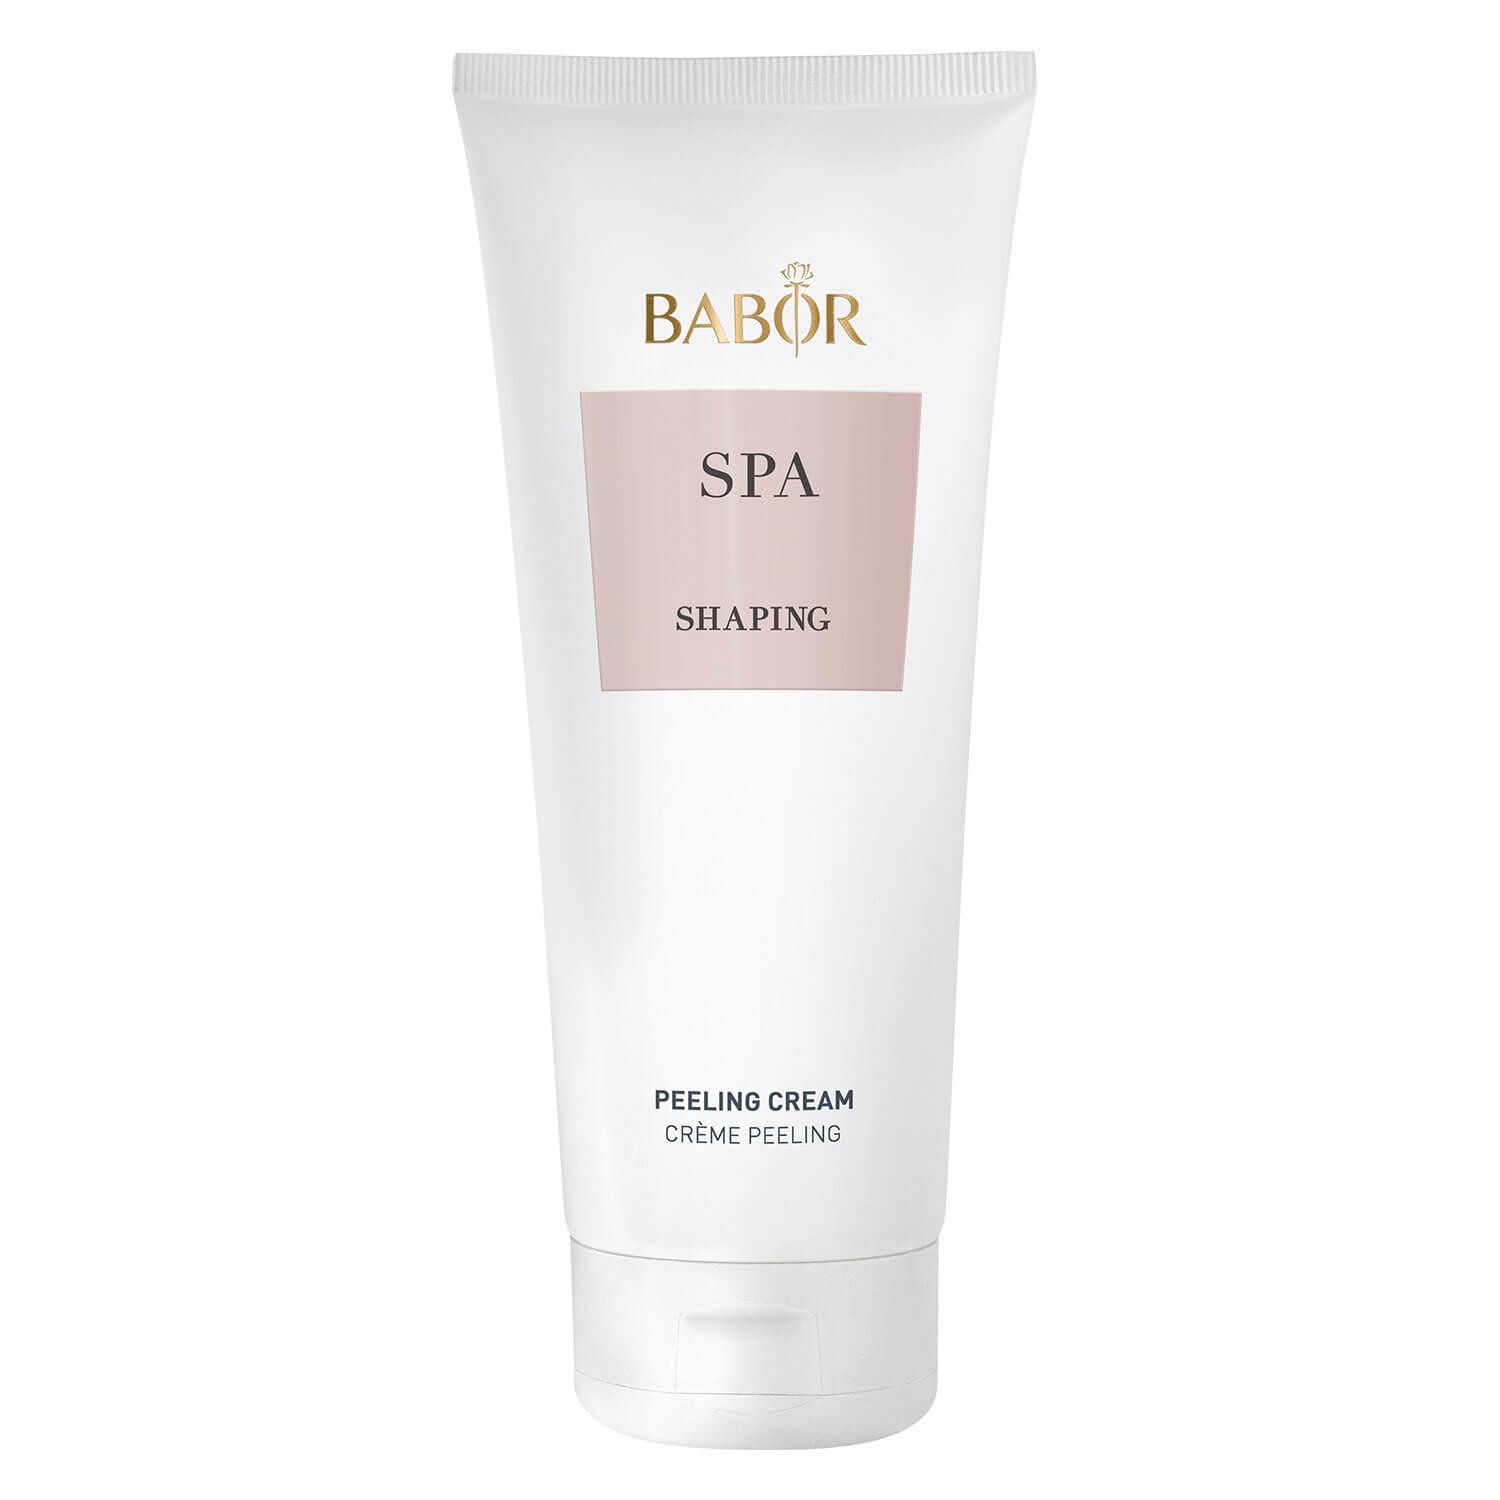 BABOR SPA - Shaping Peeling Cream